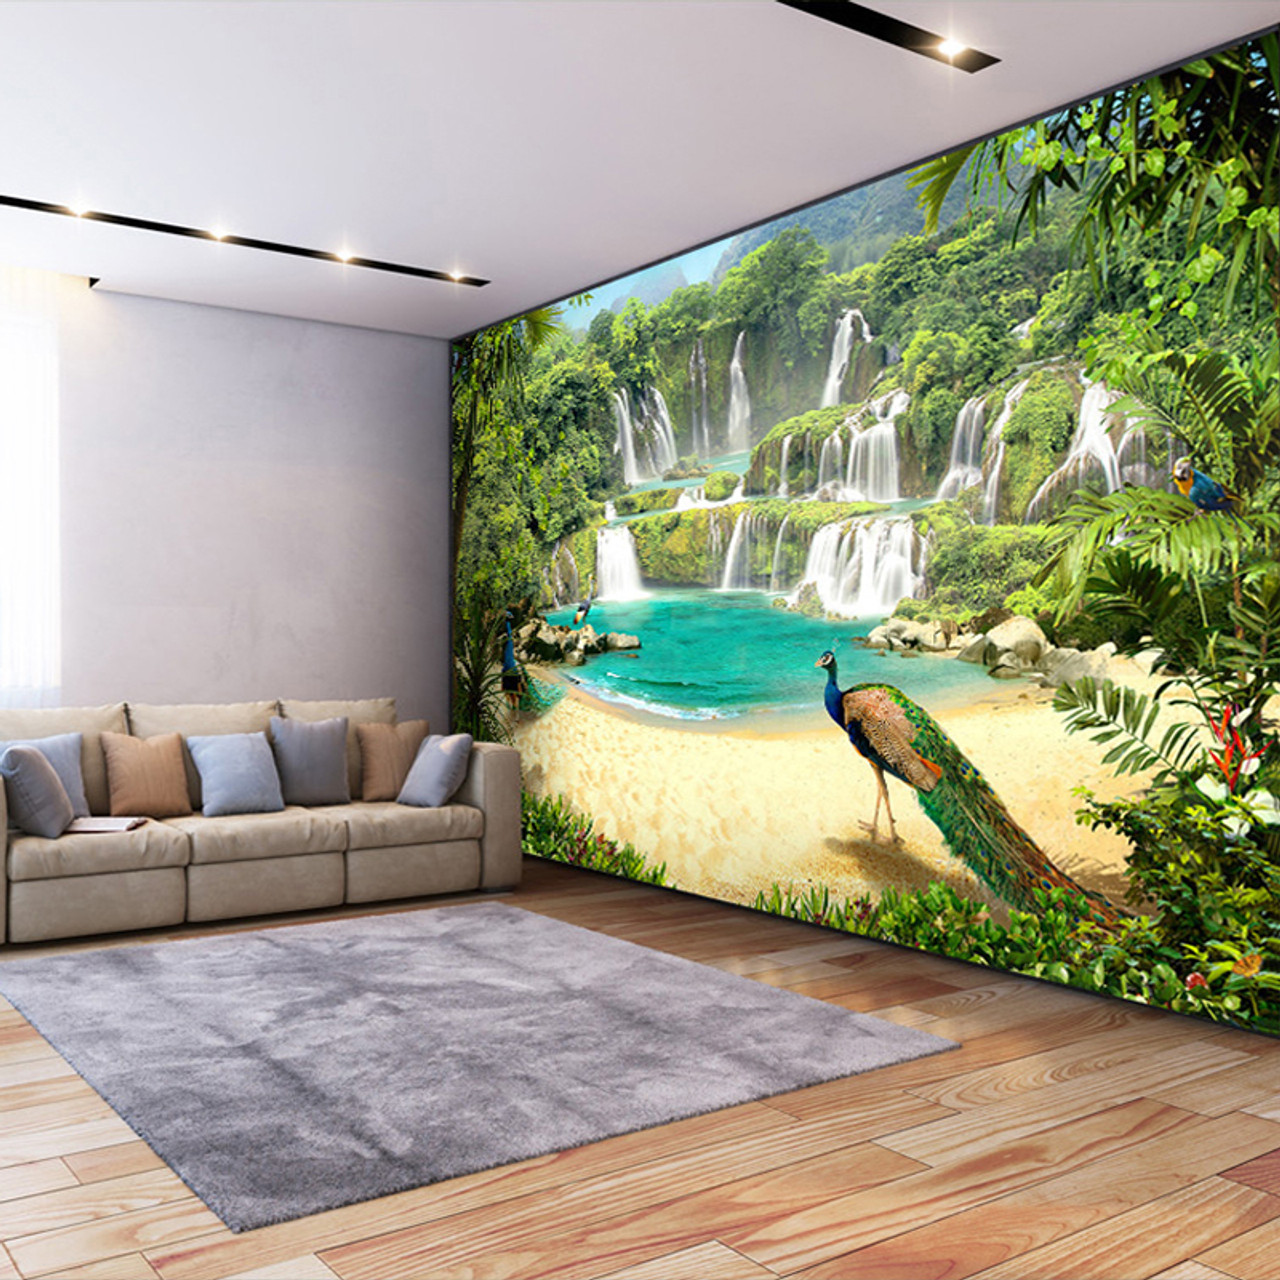 3D Wallpaper Designs For Living Room Price : Home Improvement 3D